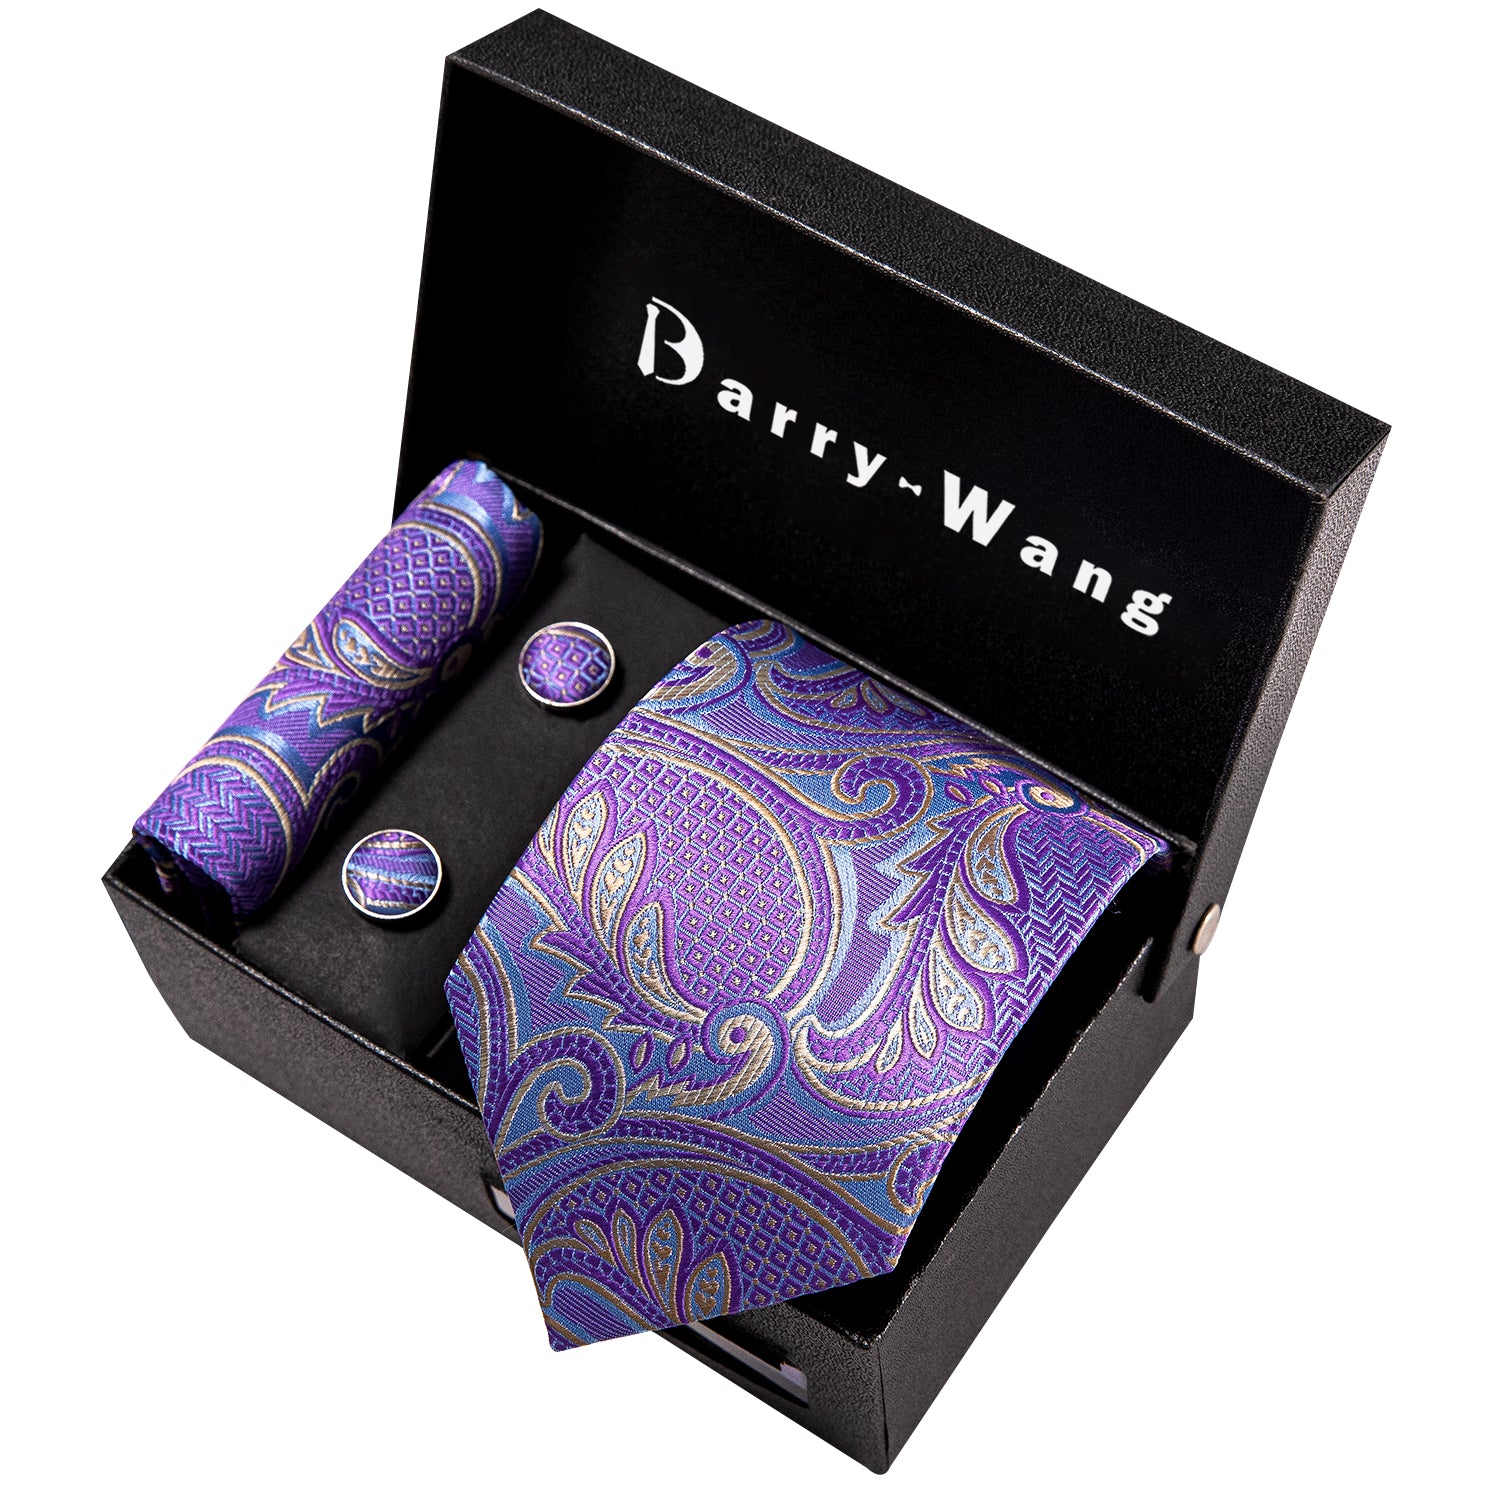 Barry.wang Floral Tie Lavender Purple Paisley Silk Men's Tie Gift Box Set